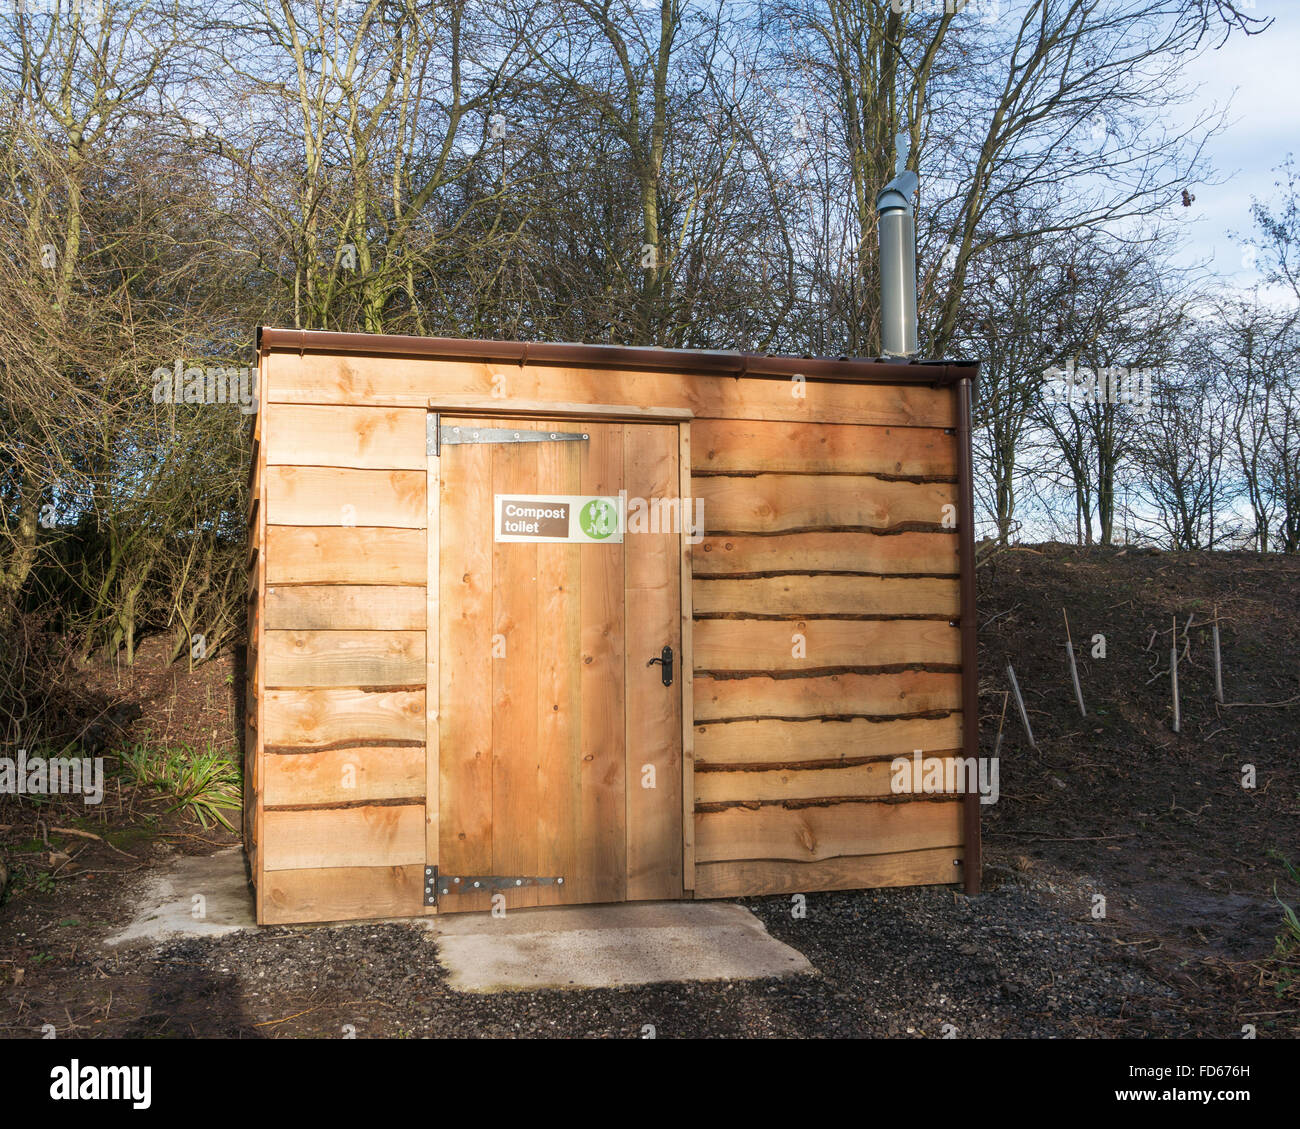 An environmentally friendly composting toilet, seen at the Washington Wetland Centre, north east England UK Stock Photo